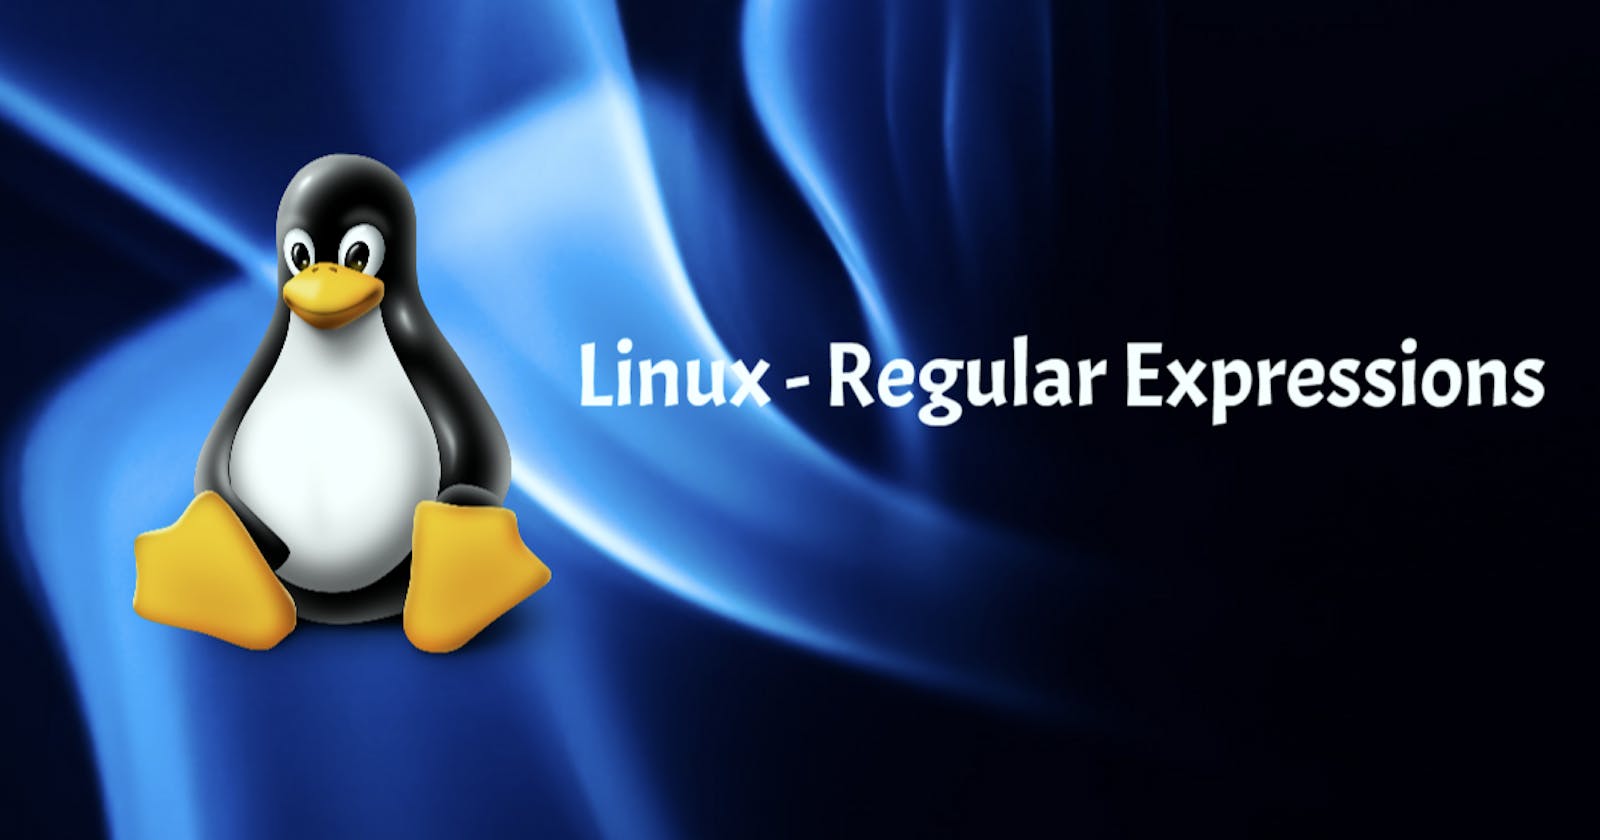 Linux - Regular Expressions